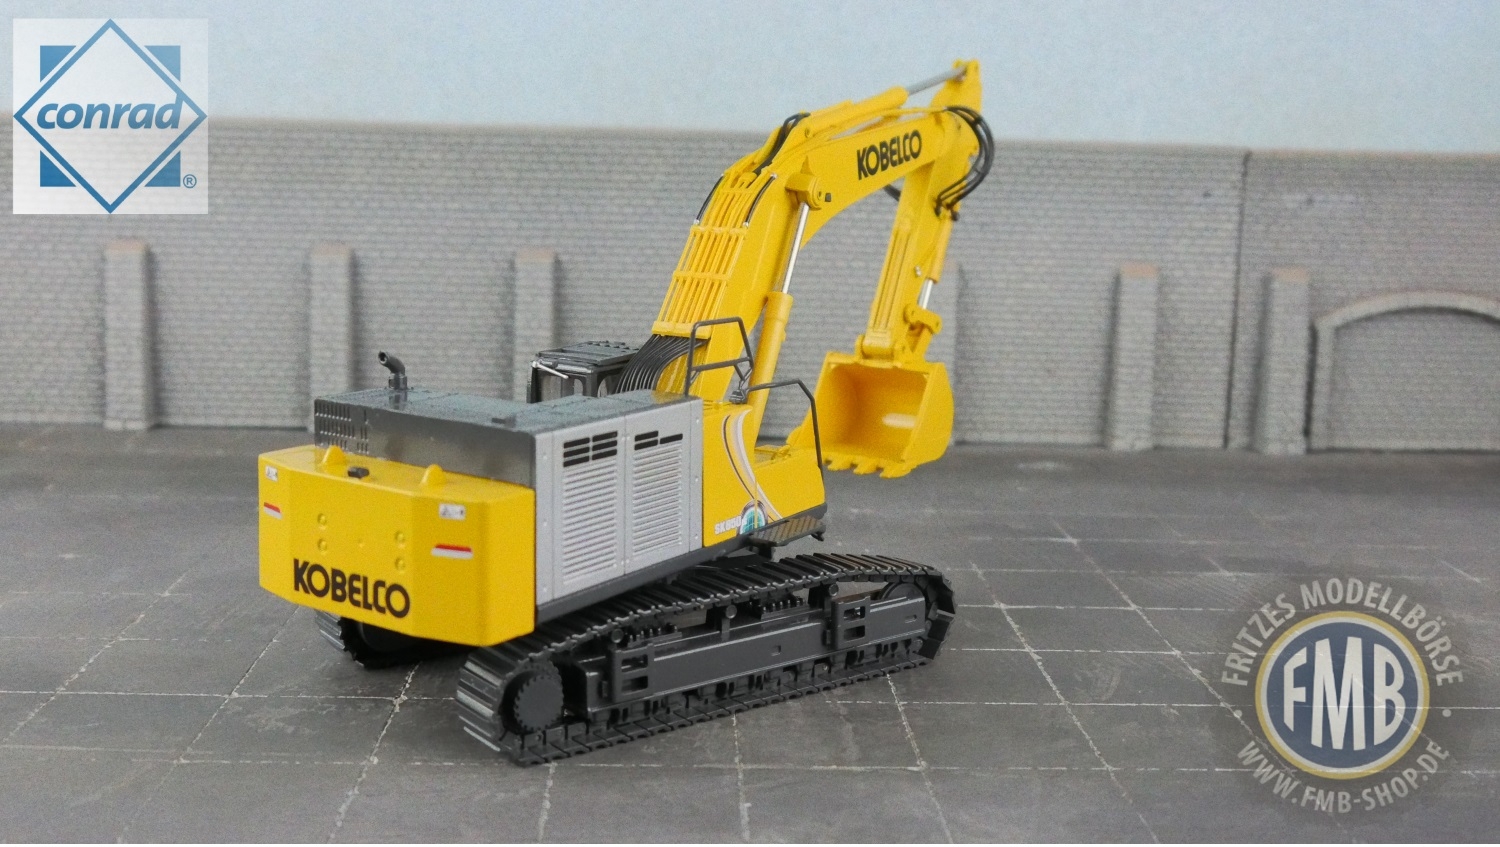 2219/01 - Conrad - Kobelco SK850 LC crawler excavator - yellow - US-Version  -